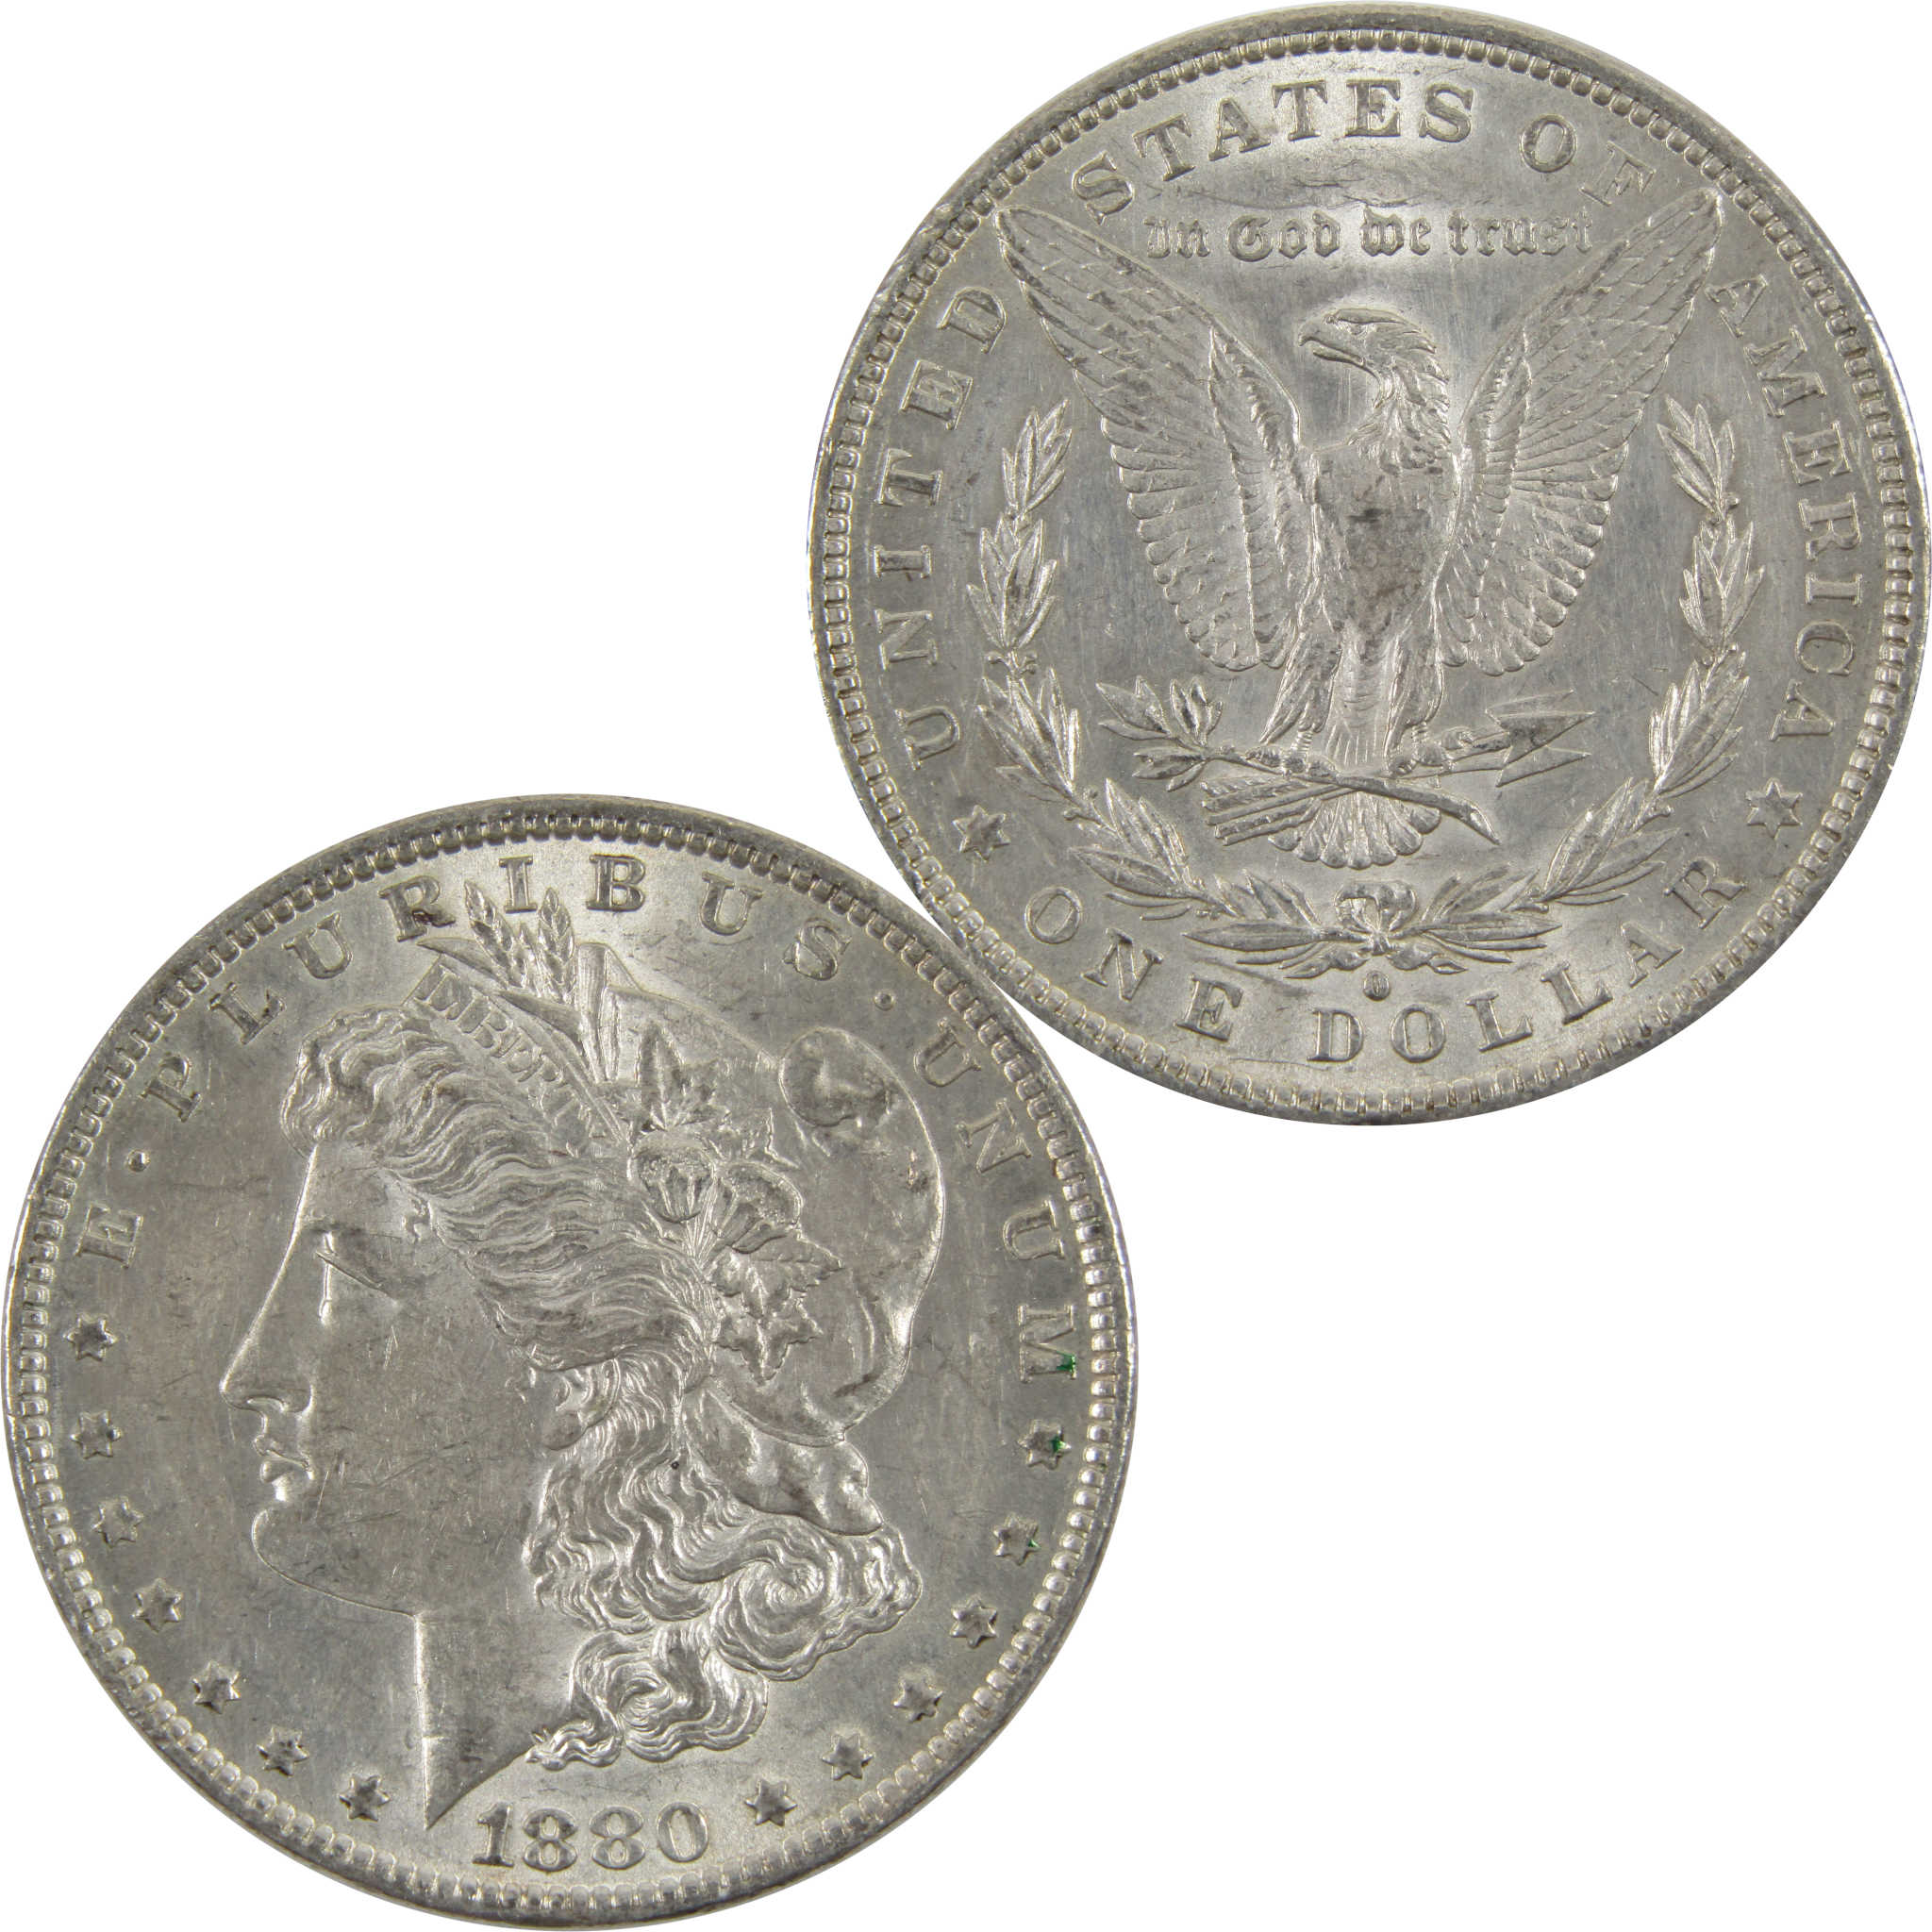 1880 O Large O Morgan Dollar Borderline Unc 90% Silver SKU:I7569 - Morgan coin - Morgan silver dollar - Morgan silver dollar for sale - Profile Coins &amp; Collectibles